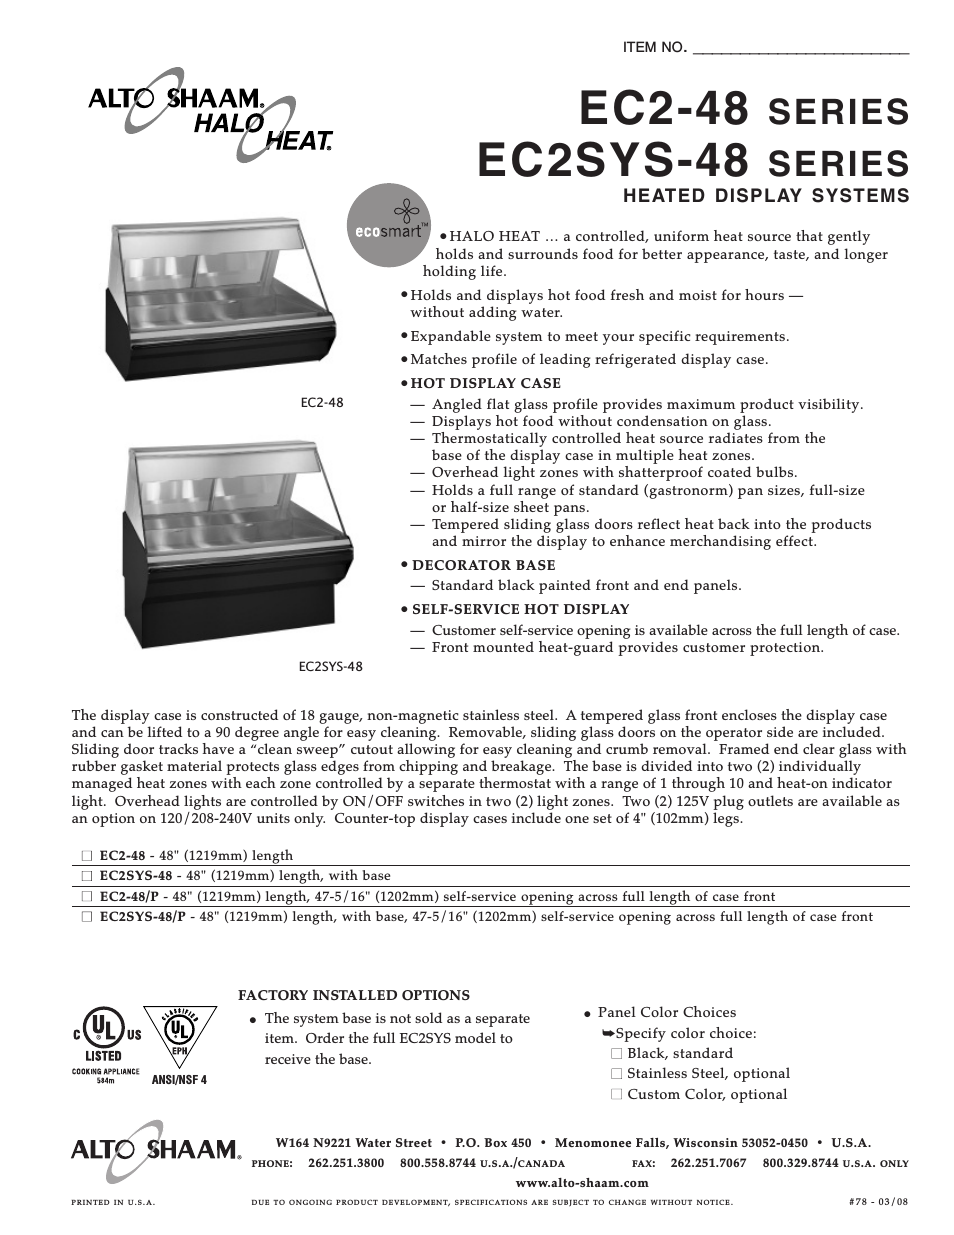 EC2SYS-48 series